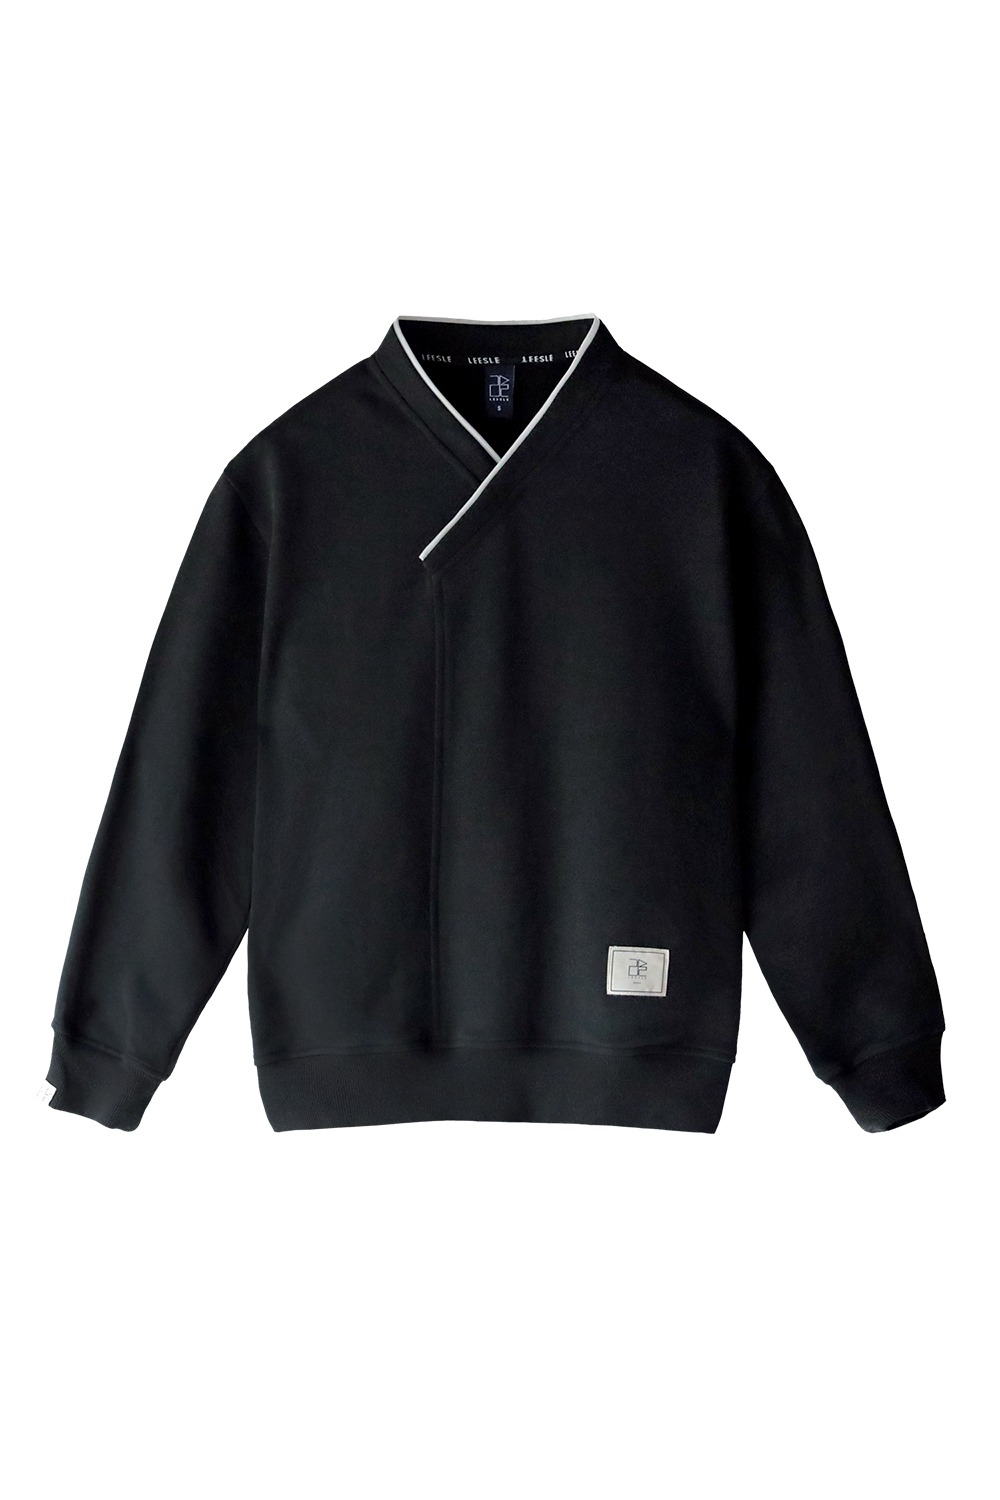 Basic Hanbok Sweatshirt [Black]